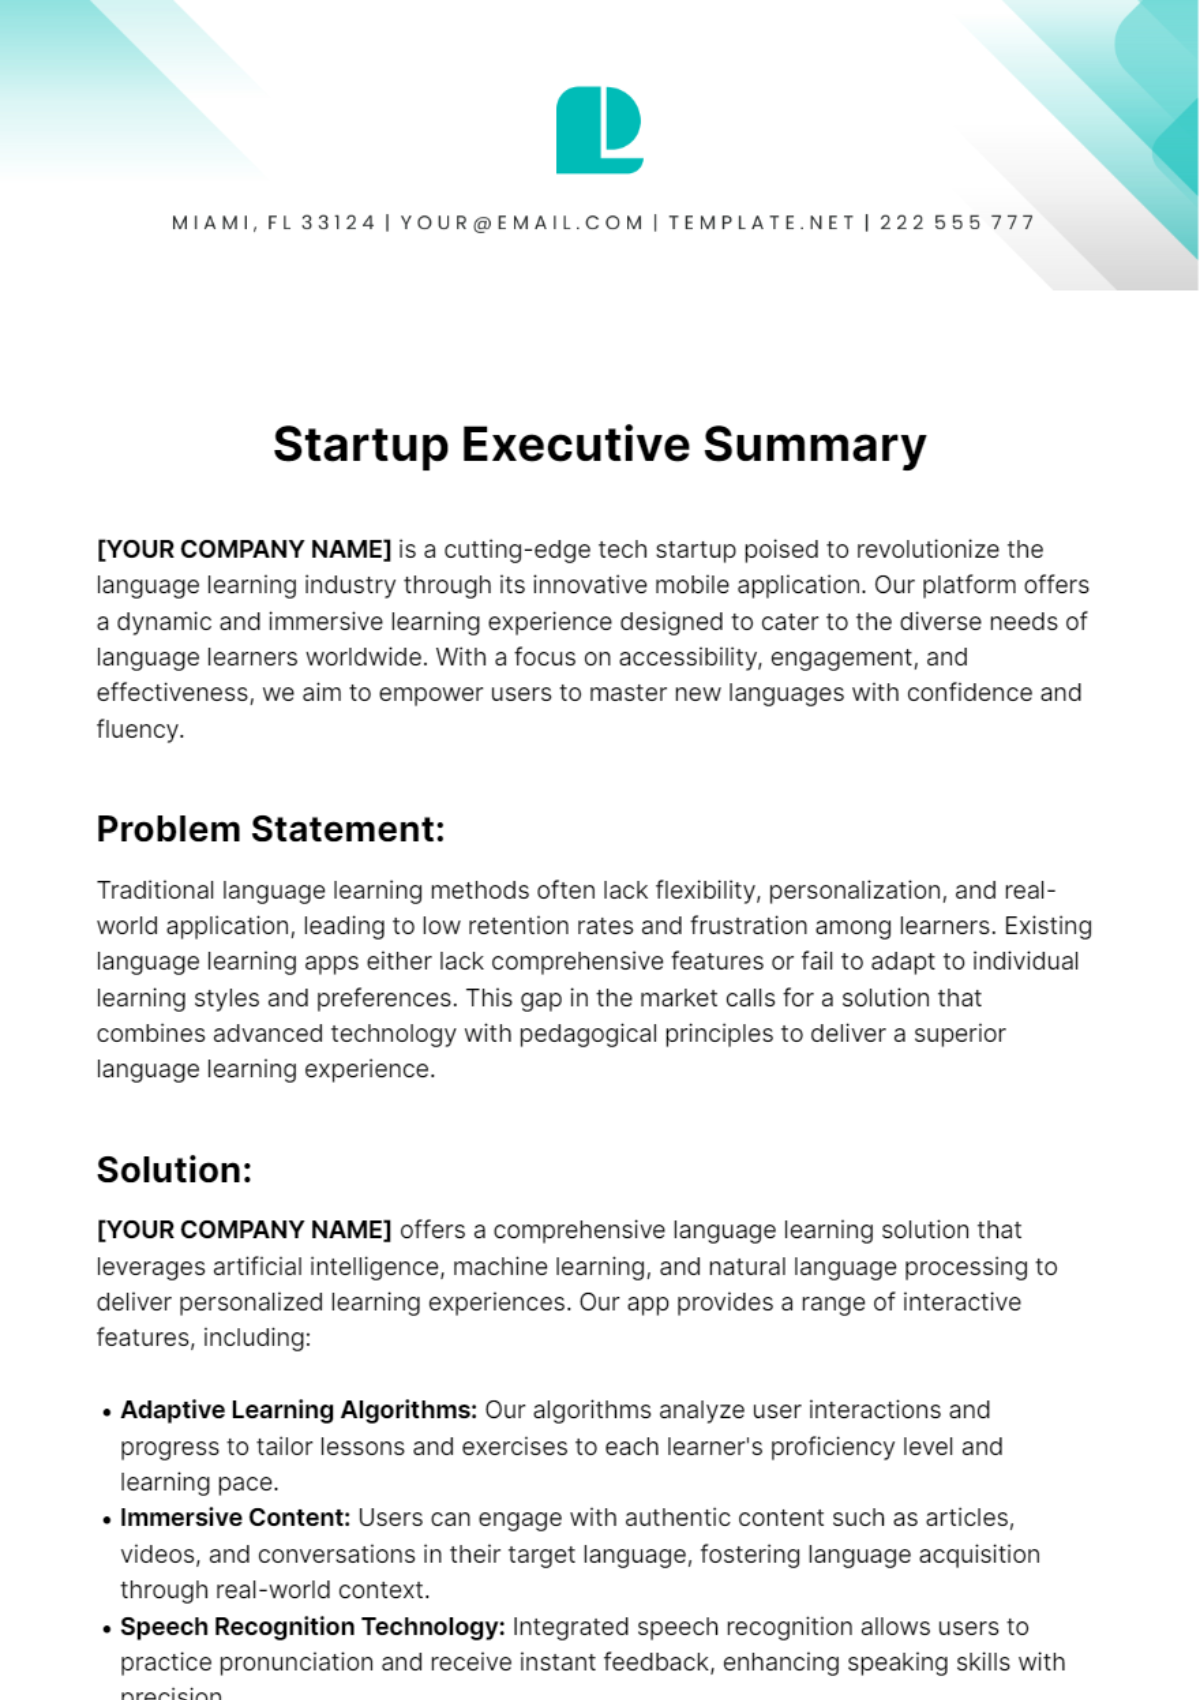 Startup Executive Summary Template